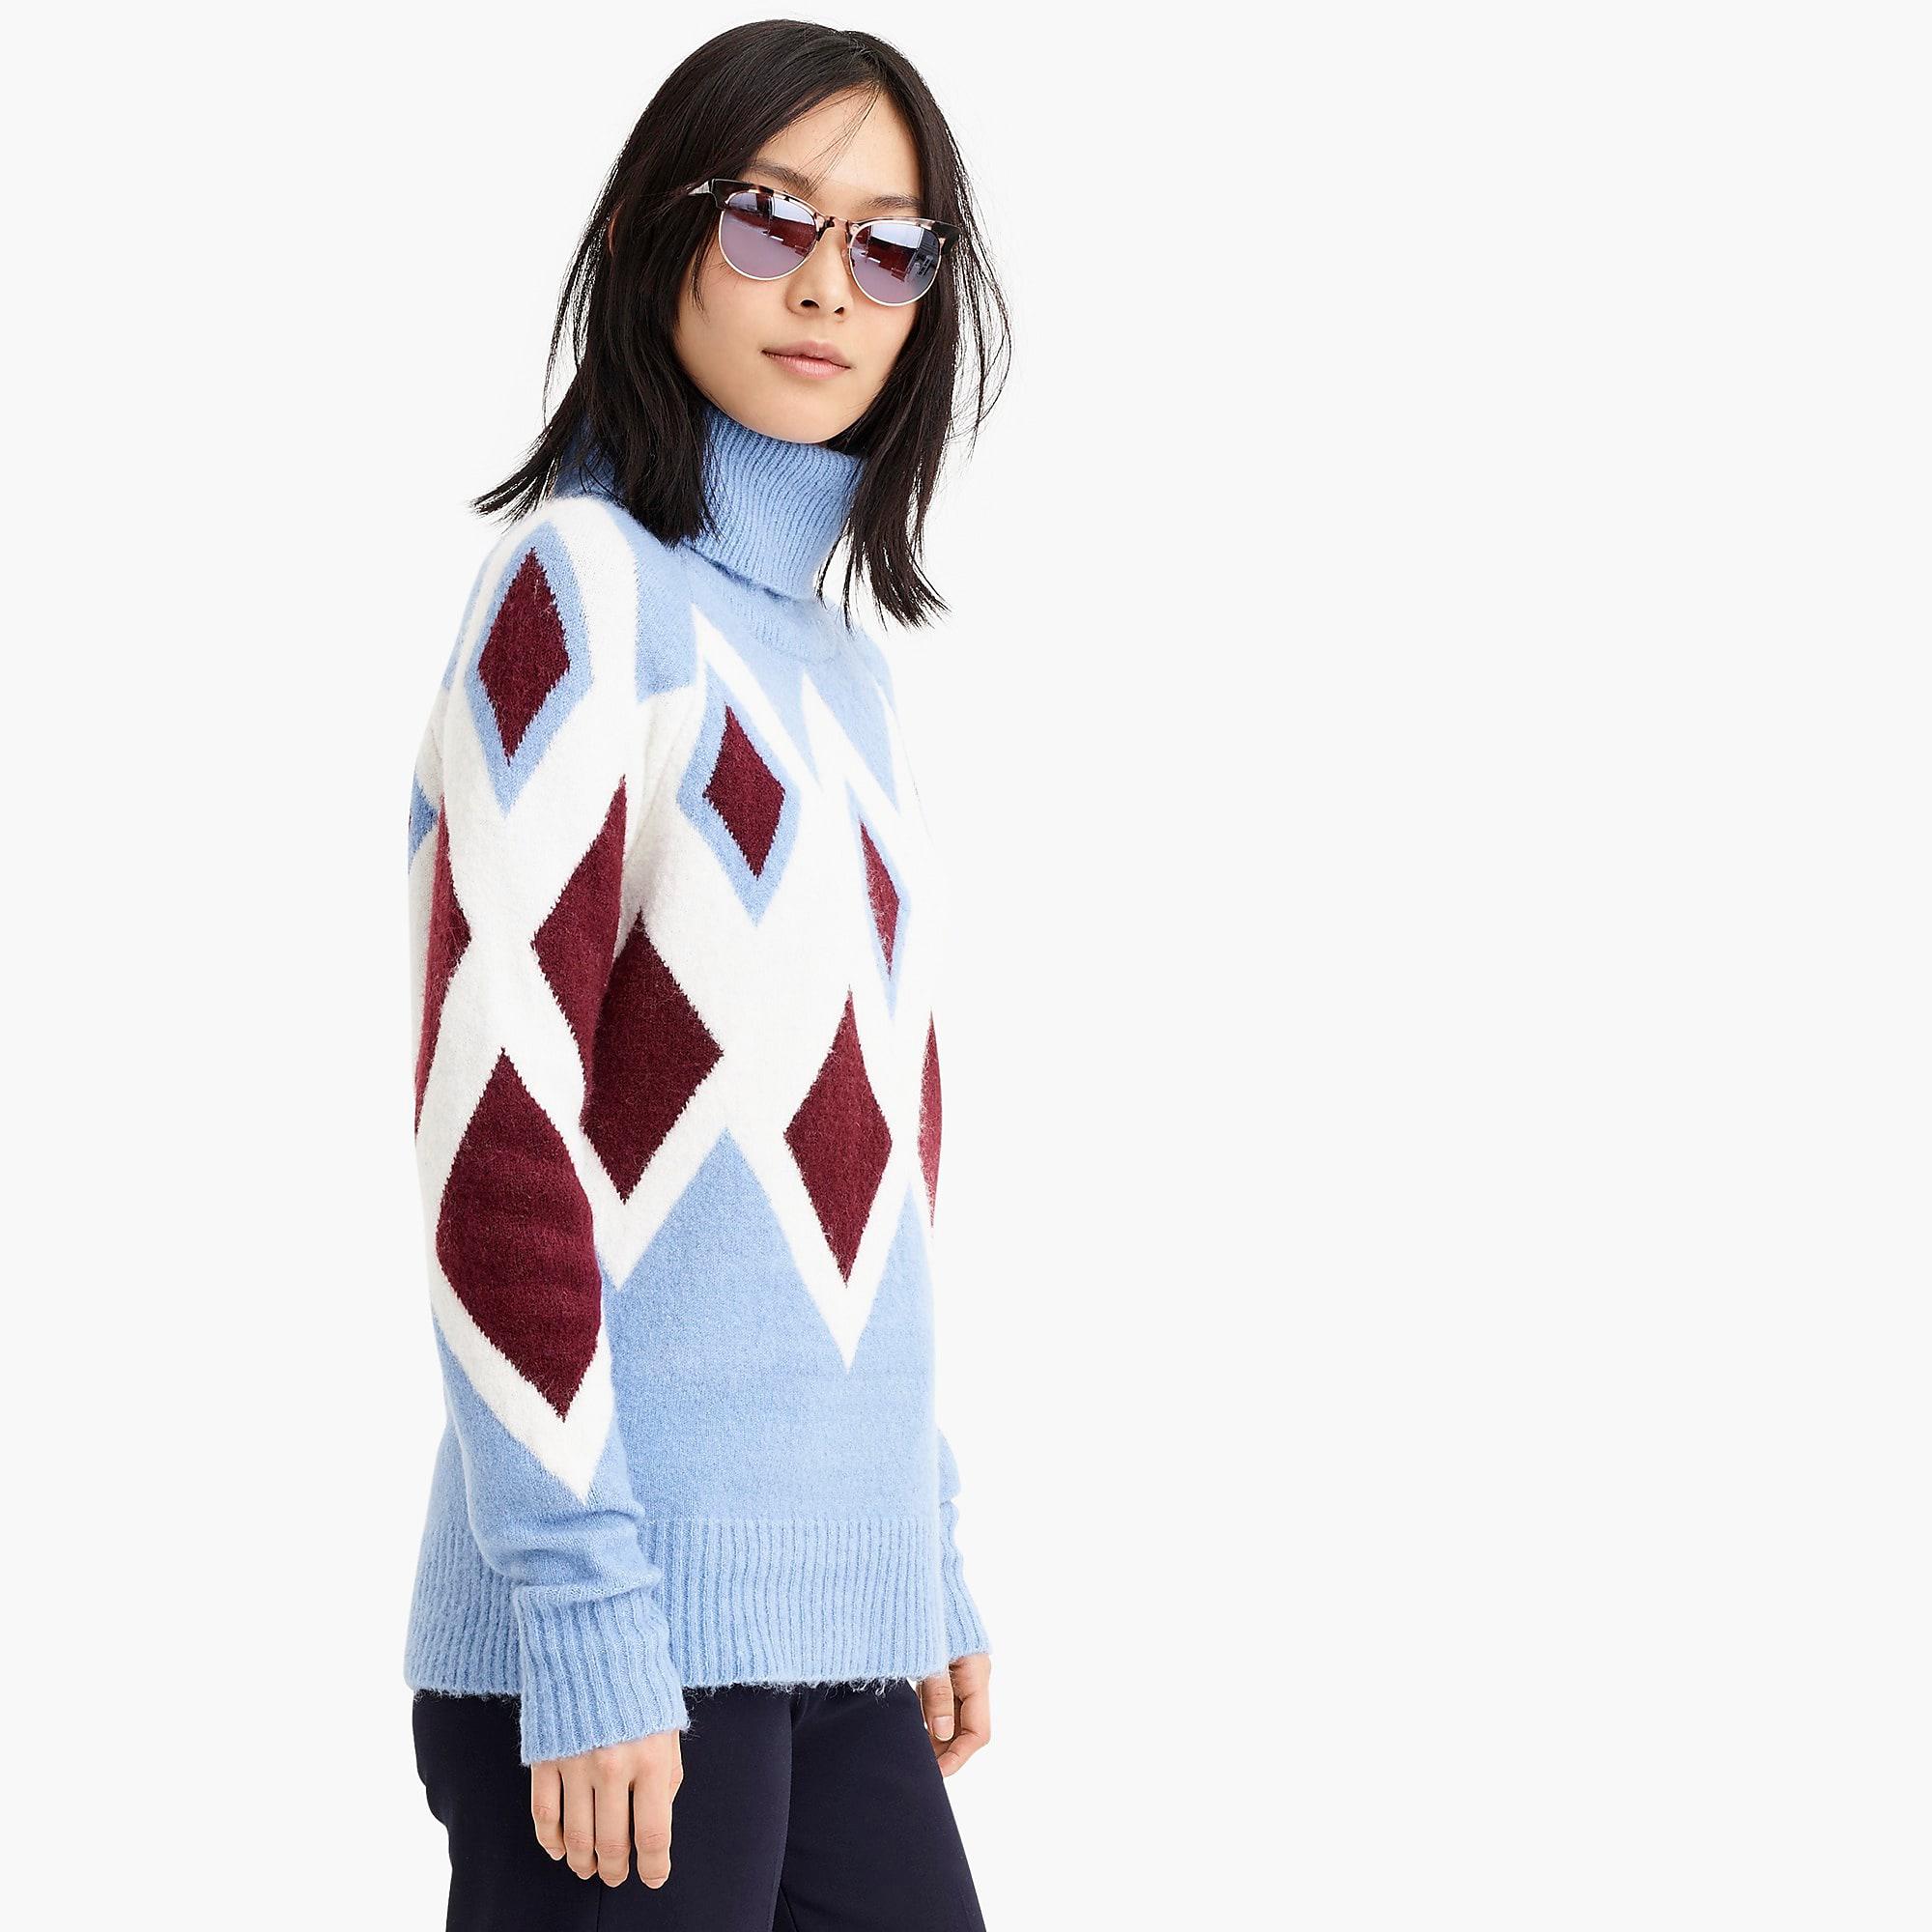 Turtleneck sweater dress in supersoft yarn patterns